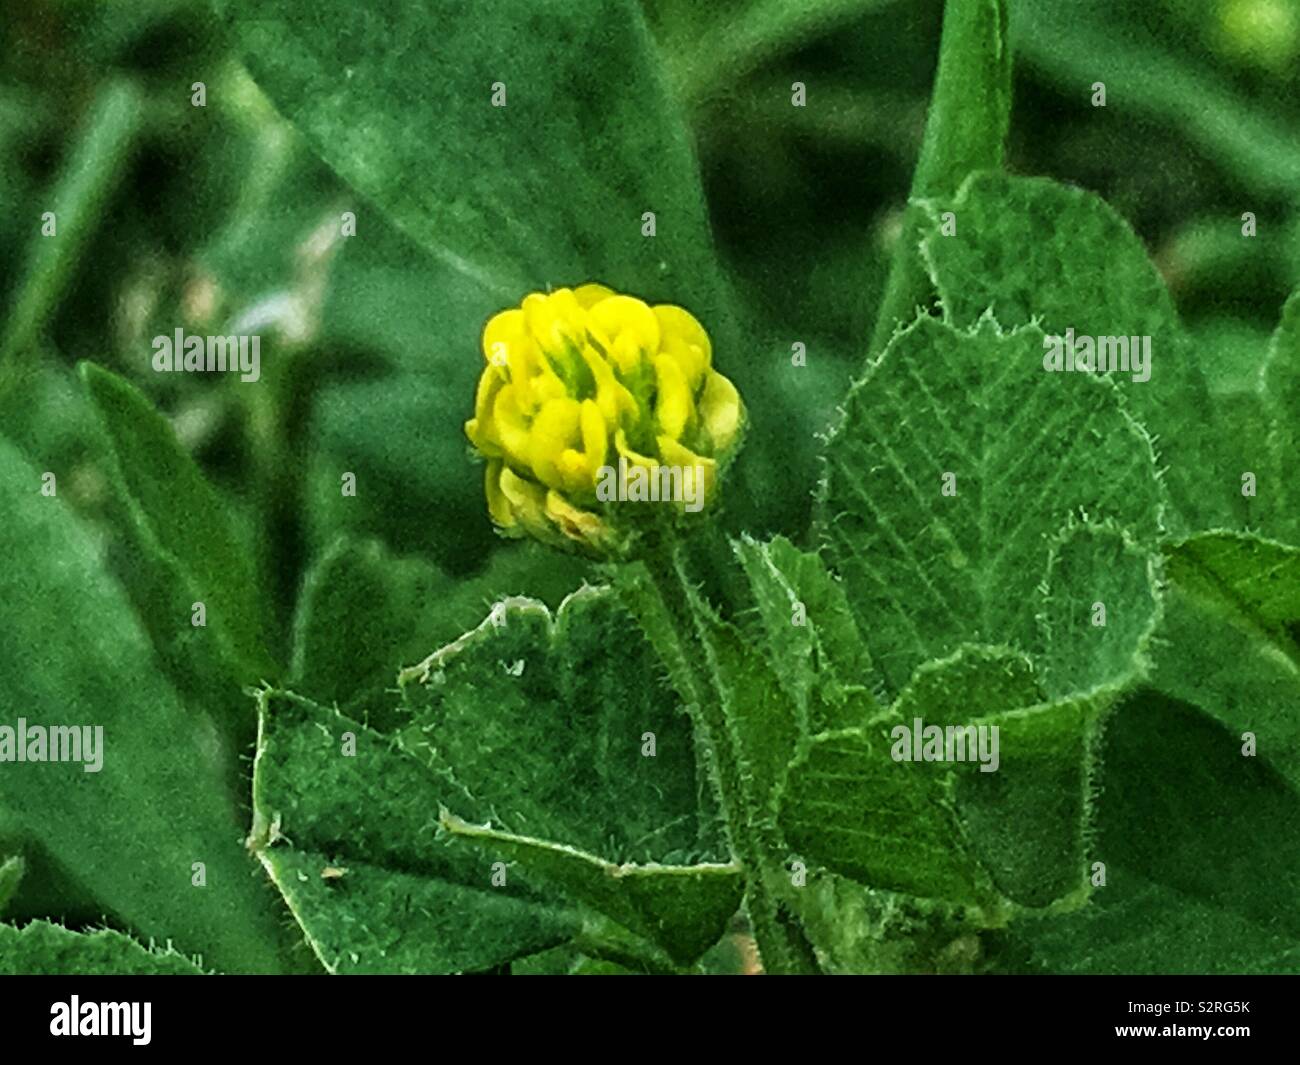 Invasive dwarf yellow flower, Medicago lupulina, Black Medic, Black Hay, Hop Clover, Hop Medic, Yellow Trefoil. Stock Photo